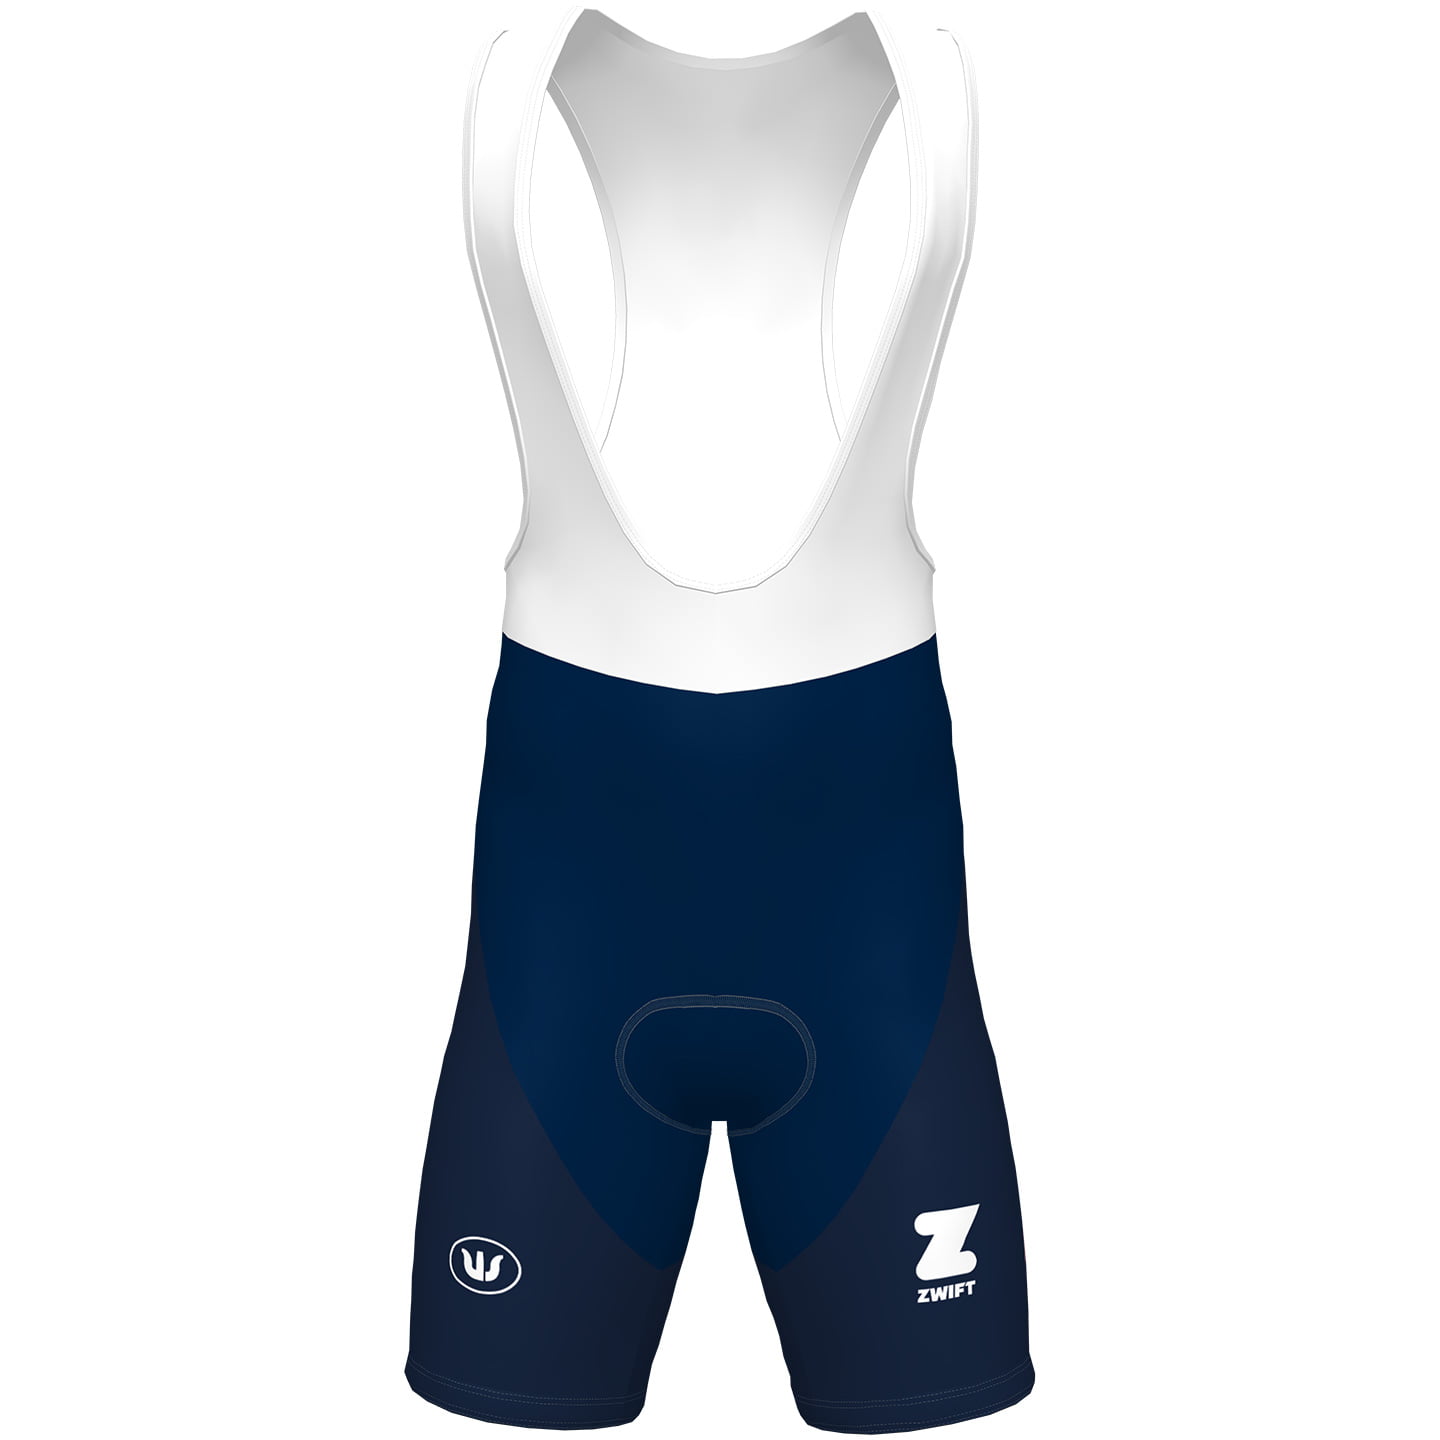 PLANTUR-PURA 2022 Bib Shorts, for men, size 2XL, Cycle trousers, Cycle gear